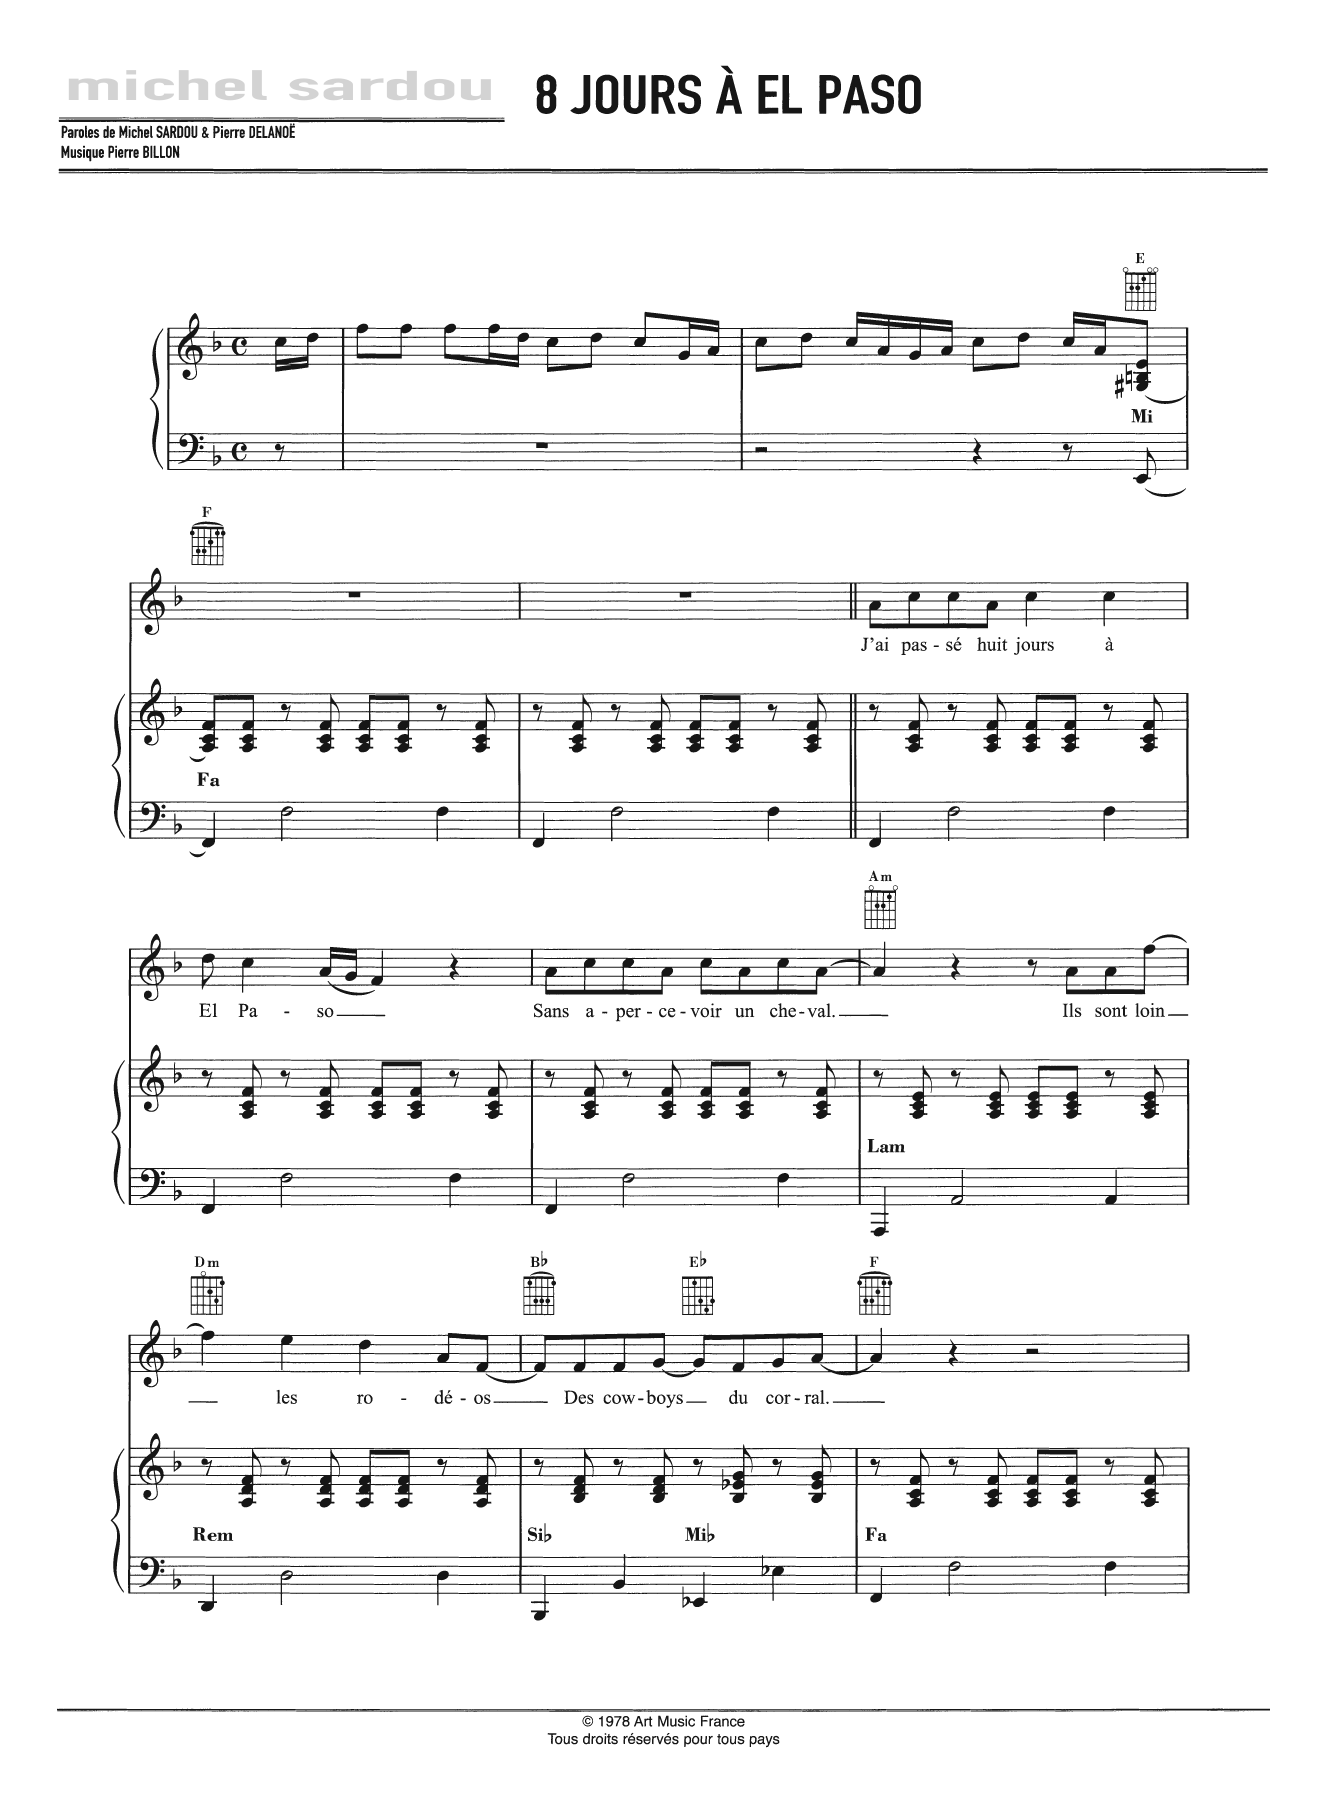 Michel Sardou Huit Jours A El Paso Sheet Music Notes & Chords for Piano, Vocal & Guitar - Download or Print PDF